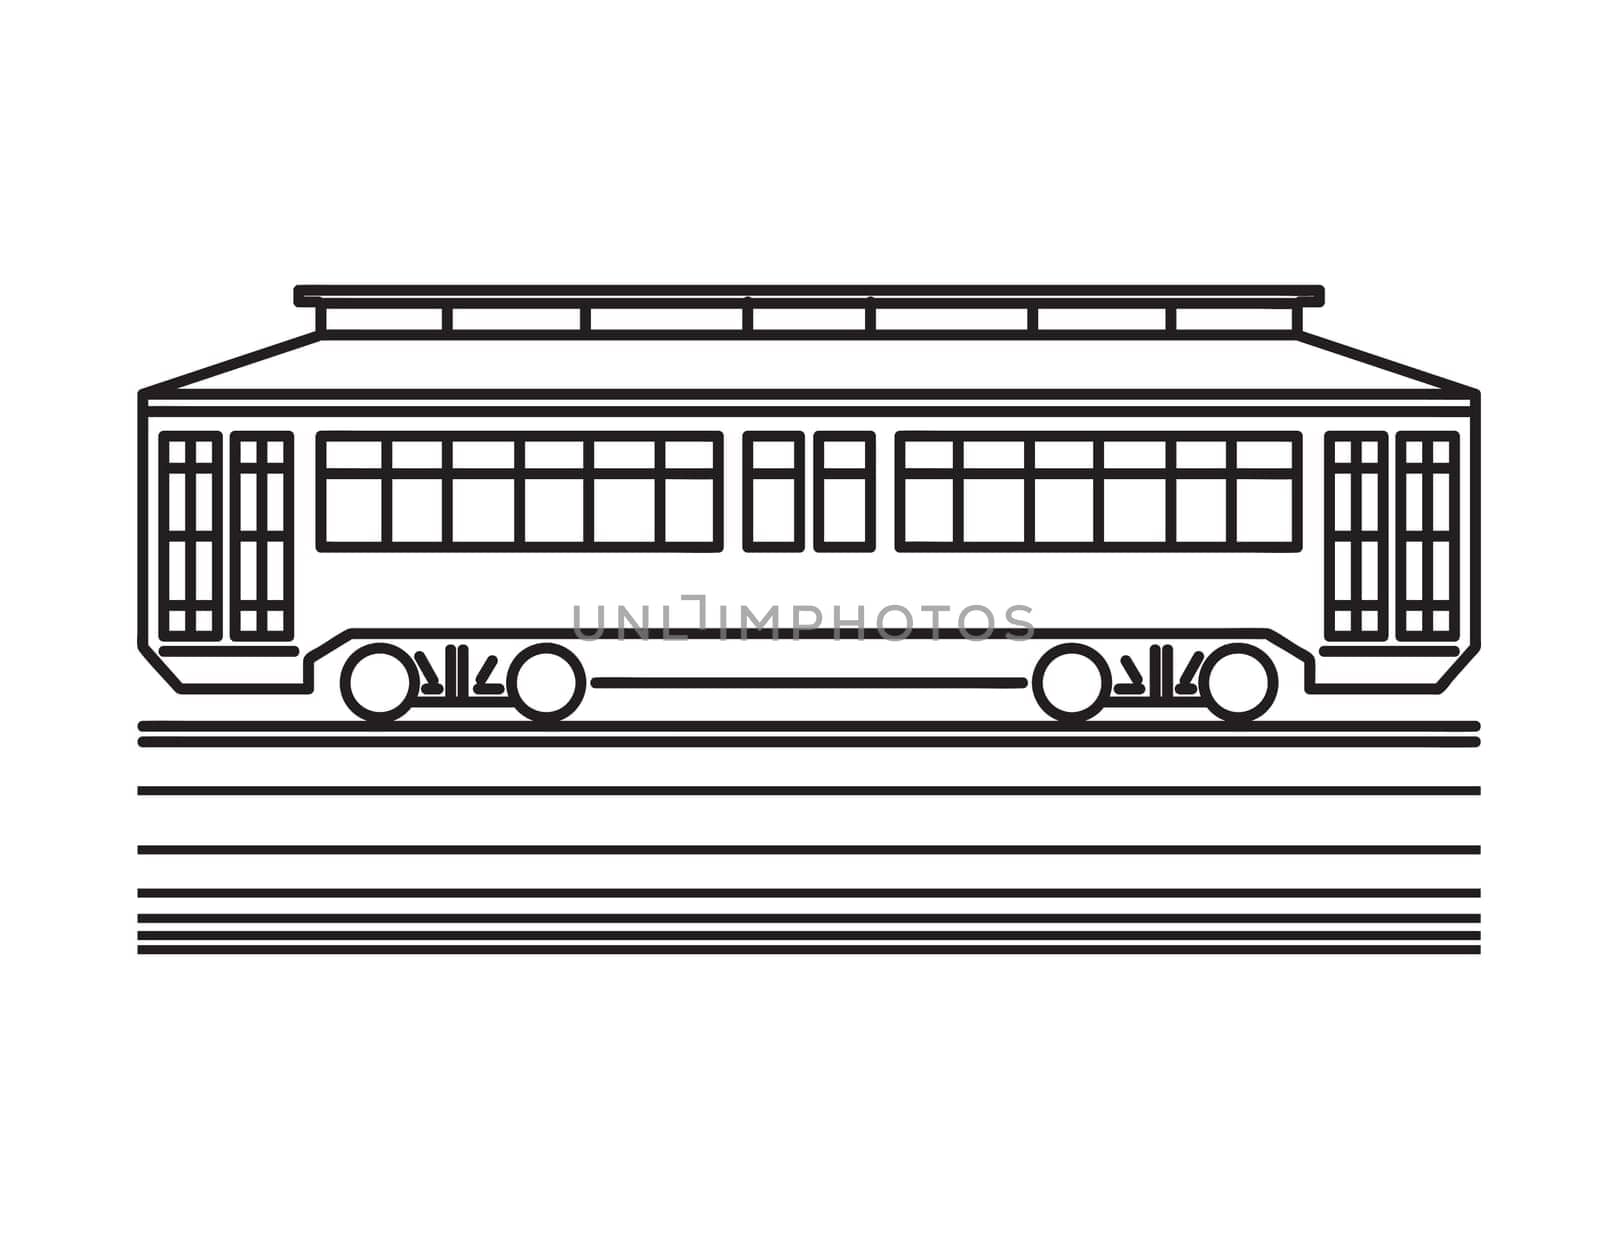 Streetcar or Trolley Car Side View Mono Line Art by patrimonio